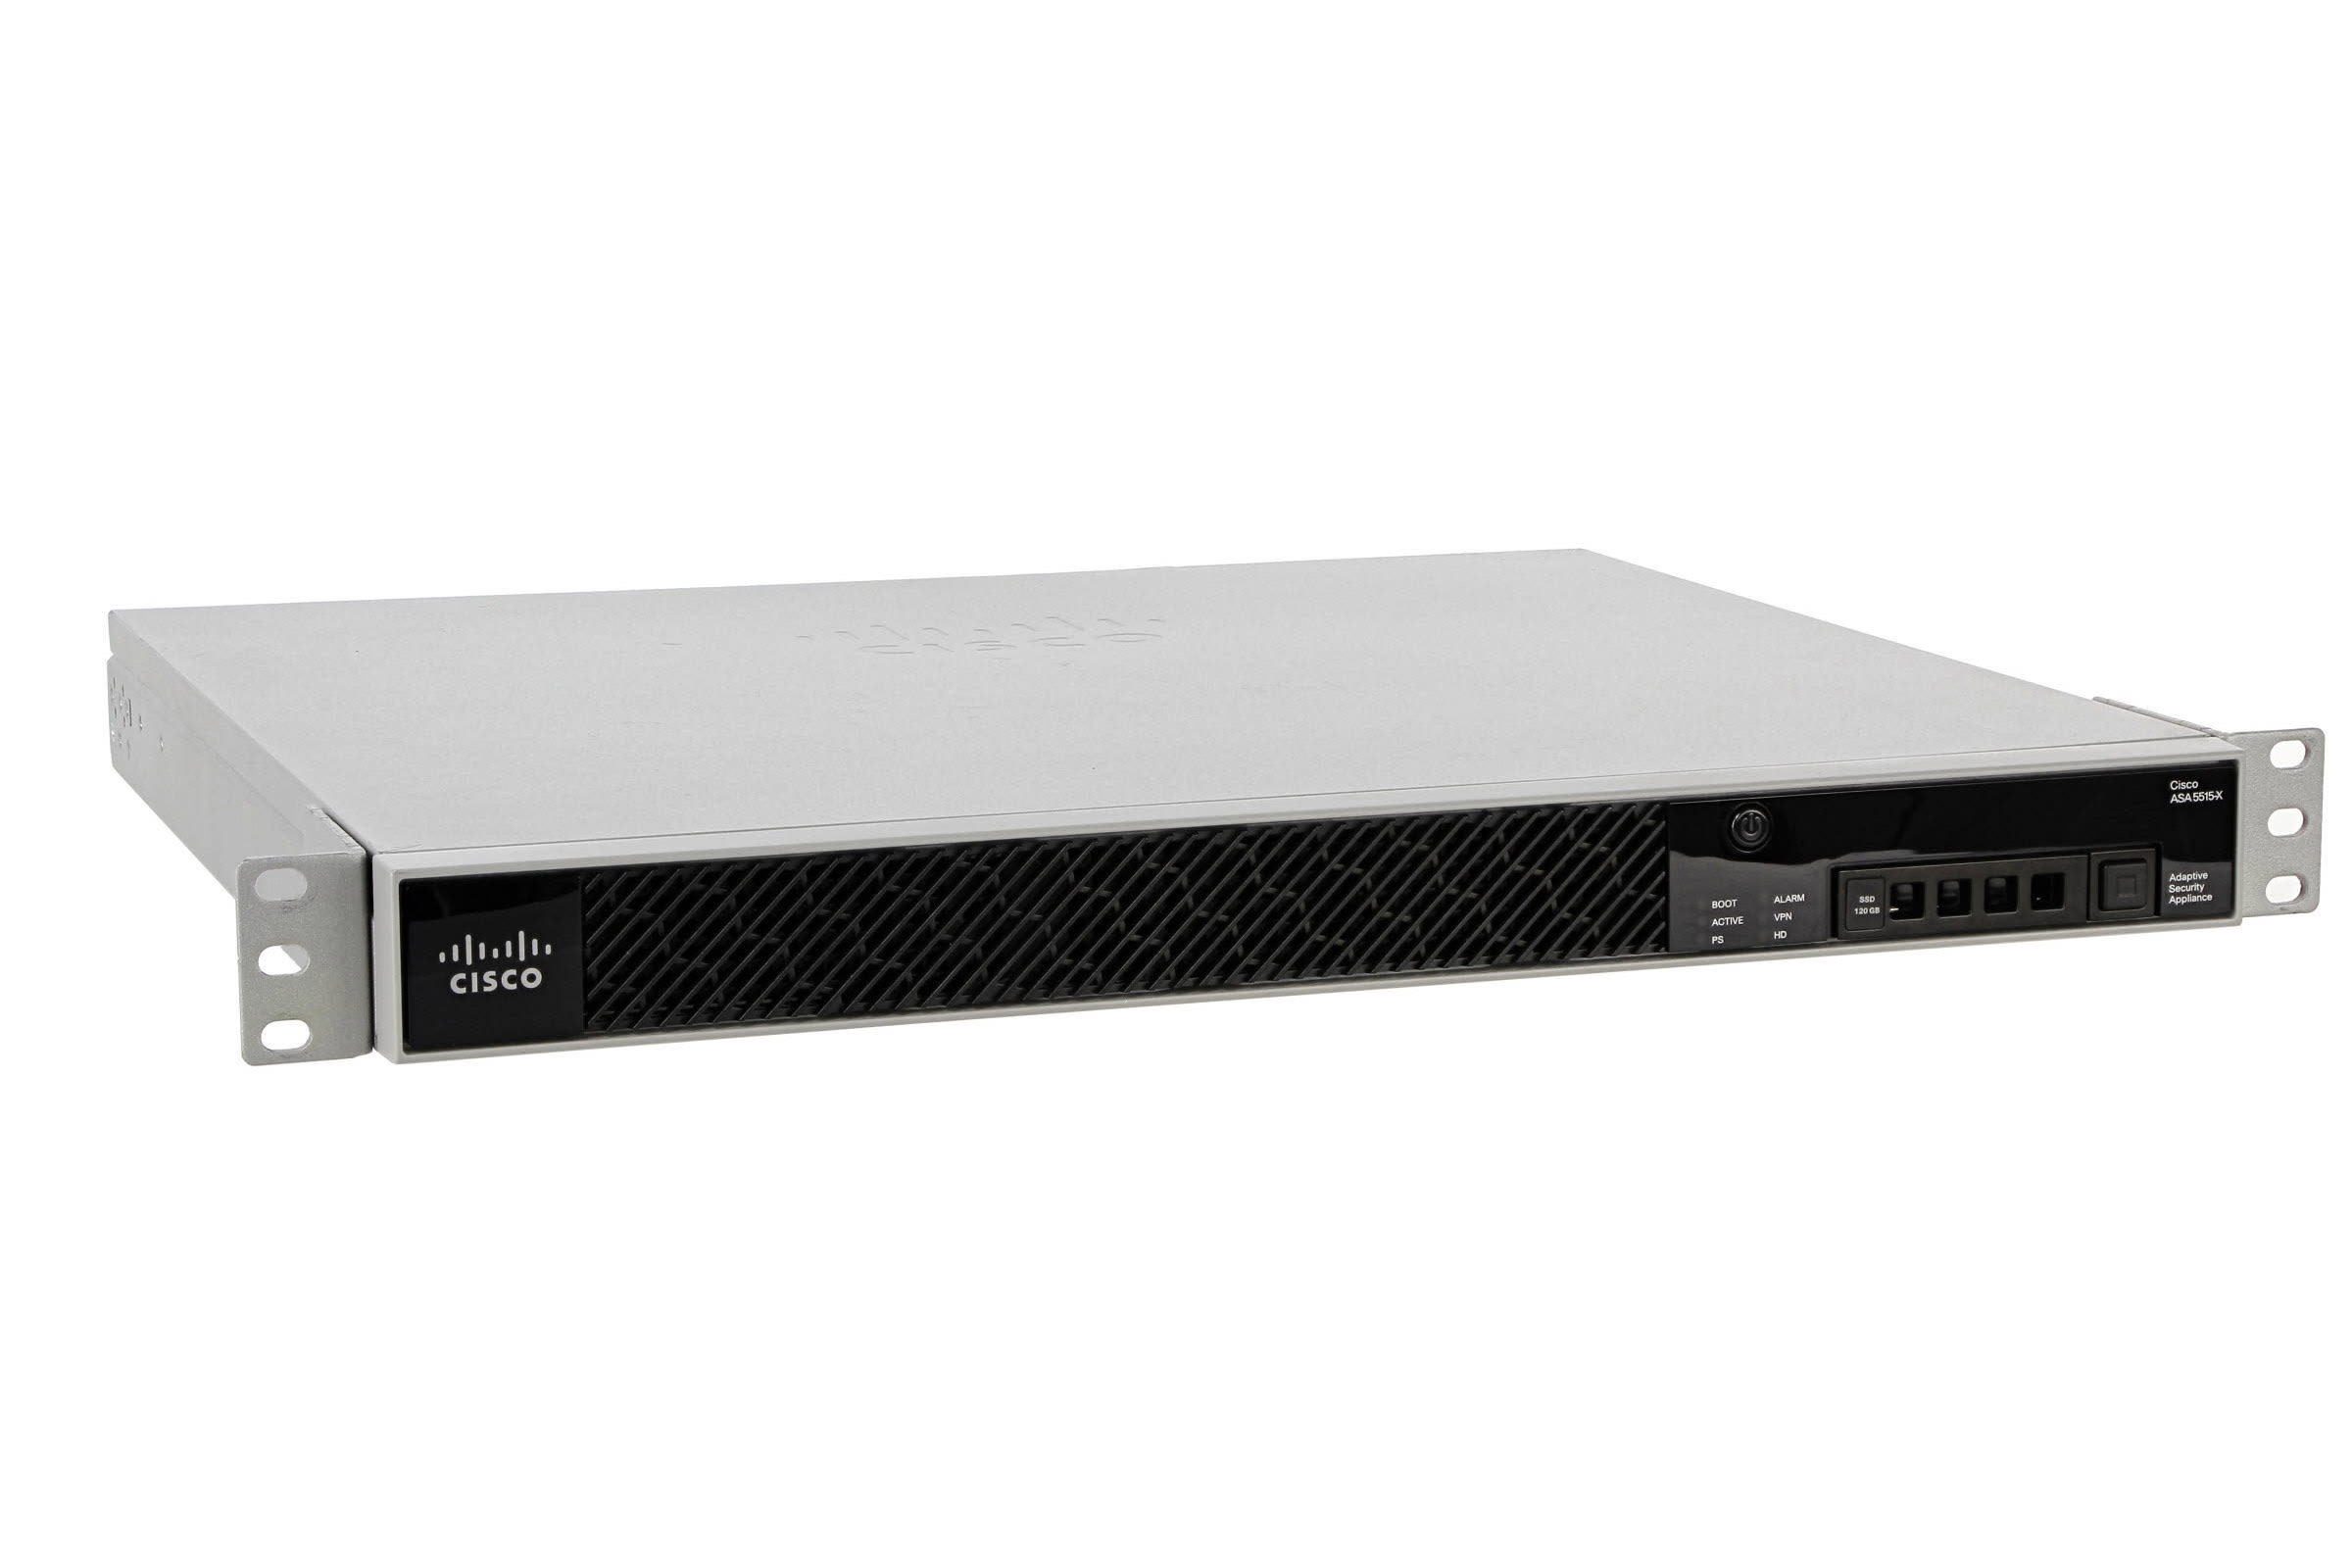 Cisco ASA5500-X Series Firewalls